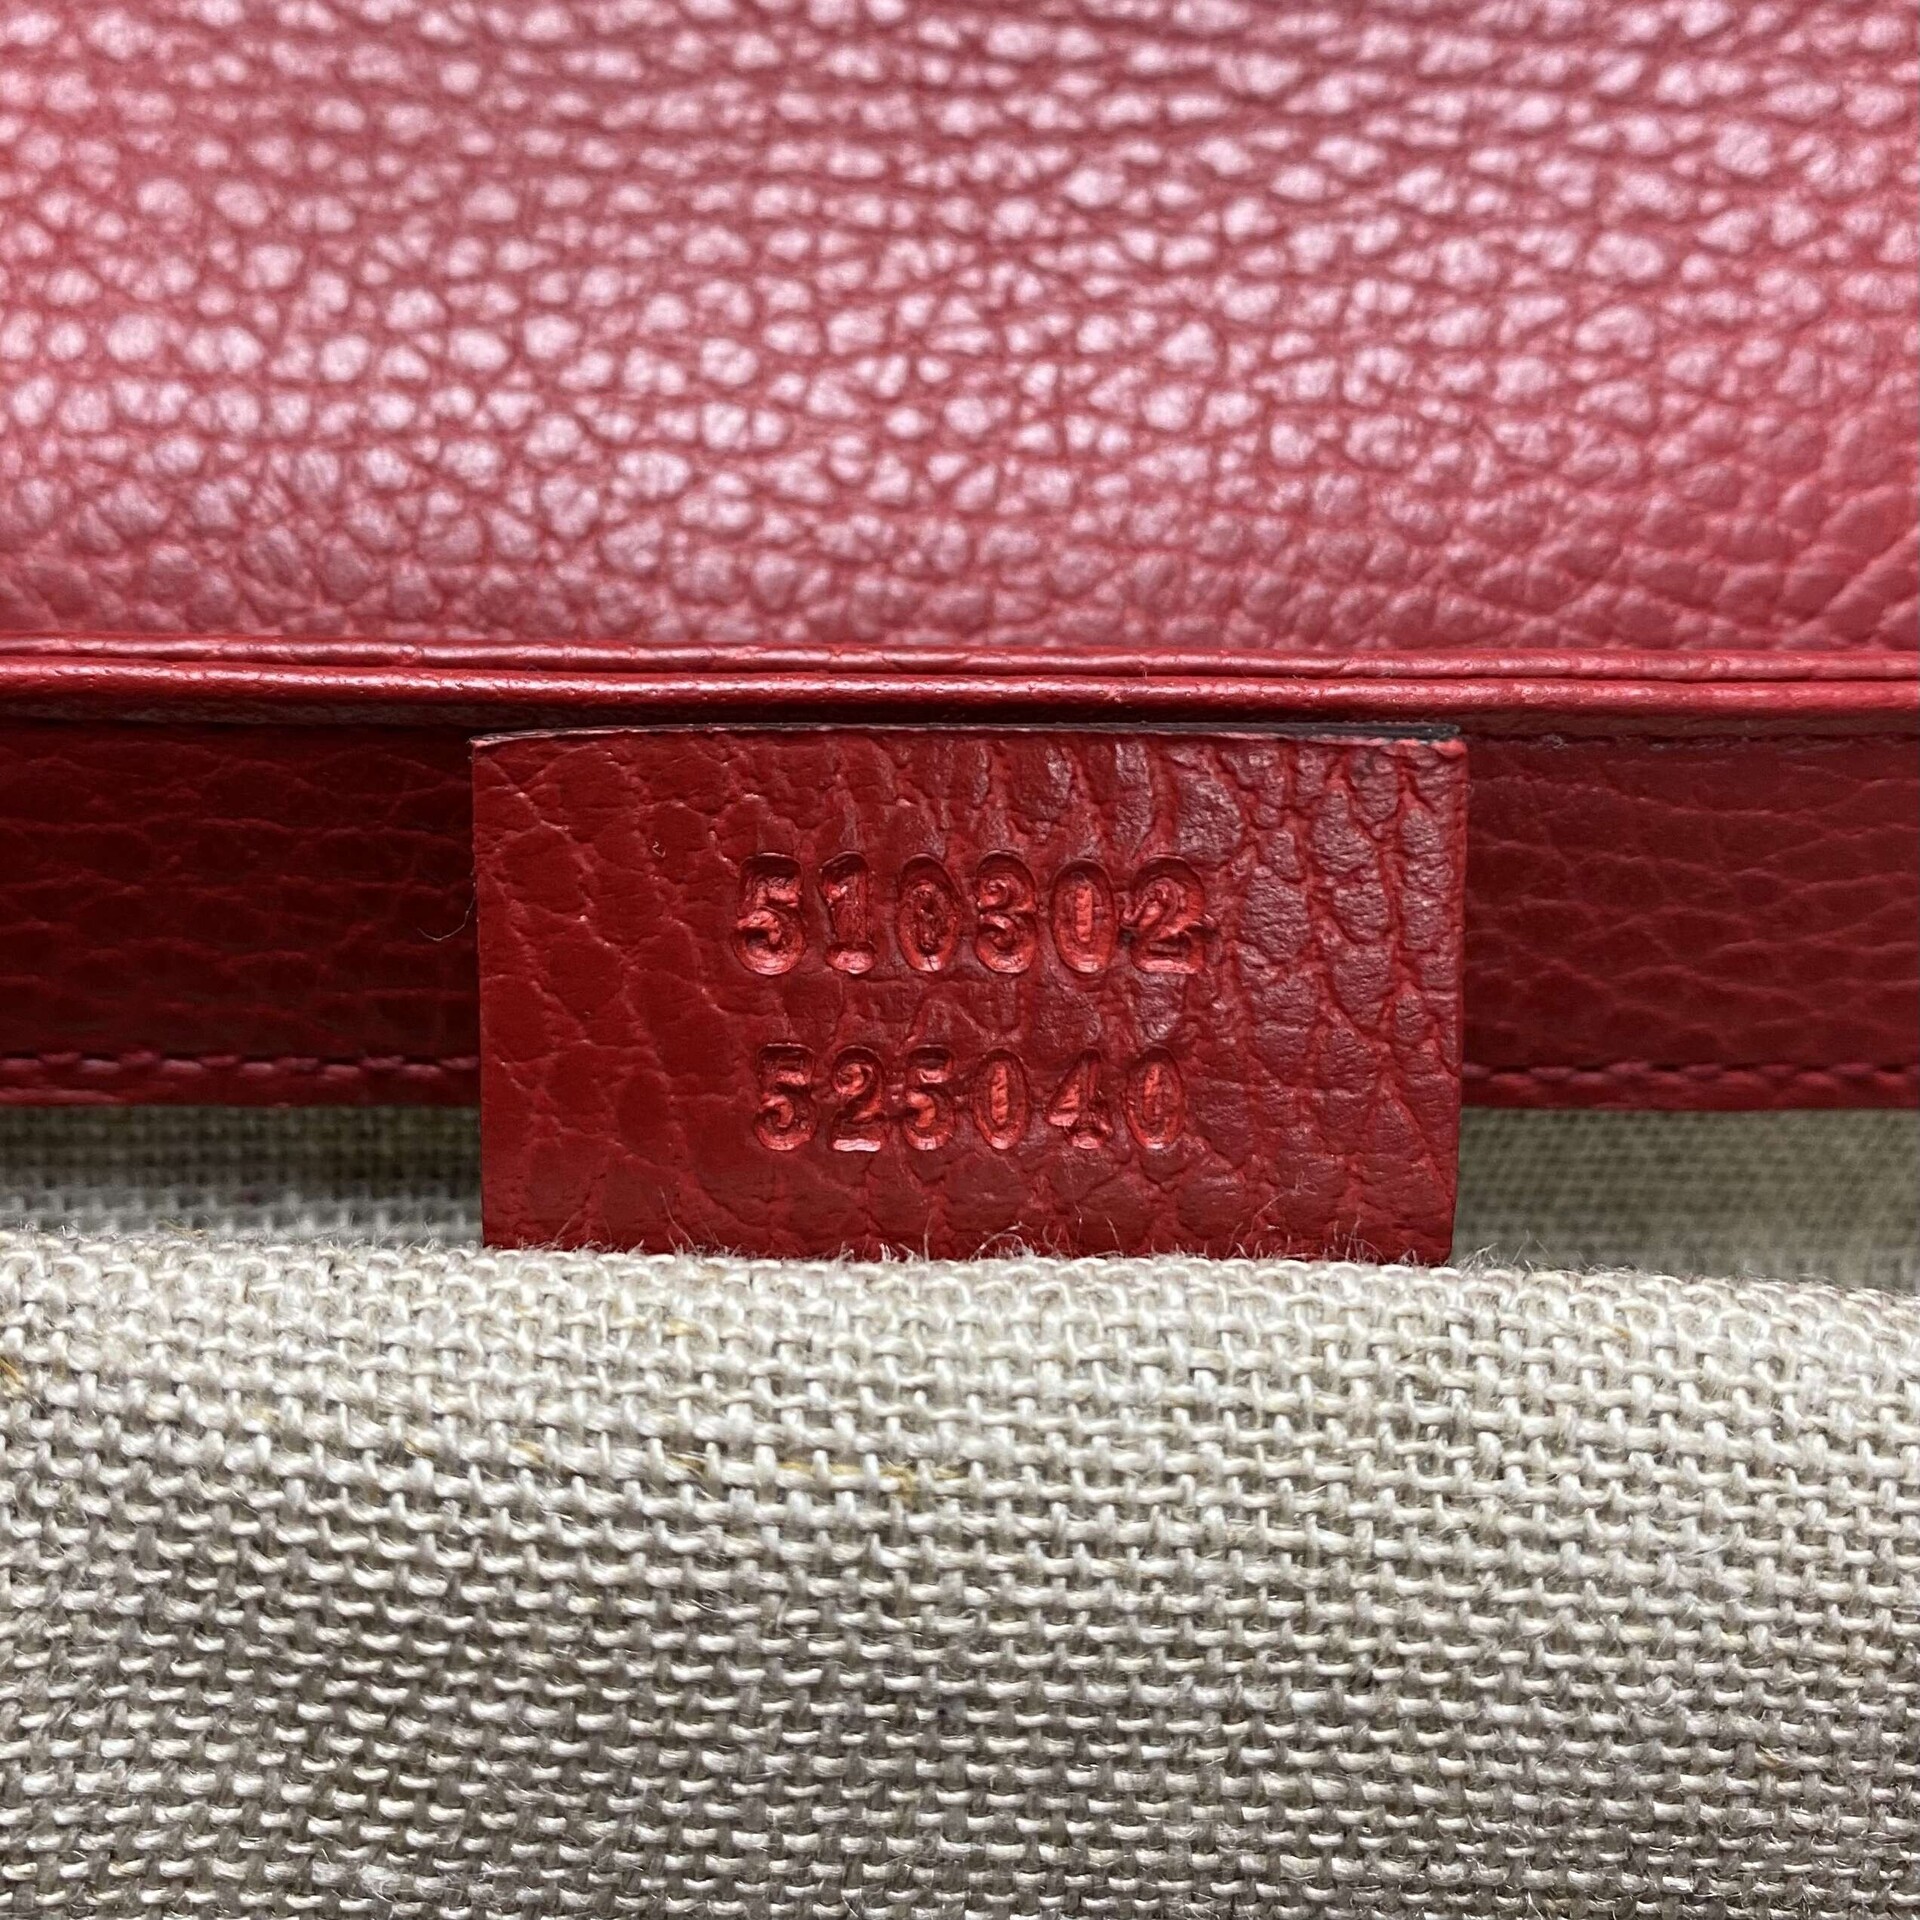 Bolsa Gucci Interlocking Vermelha